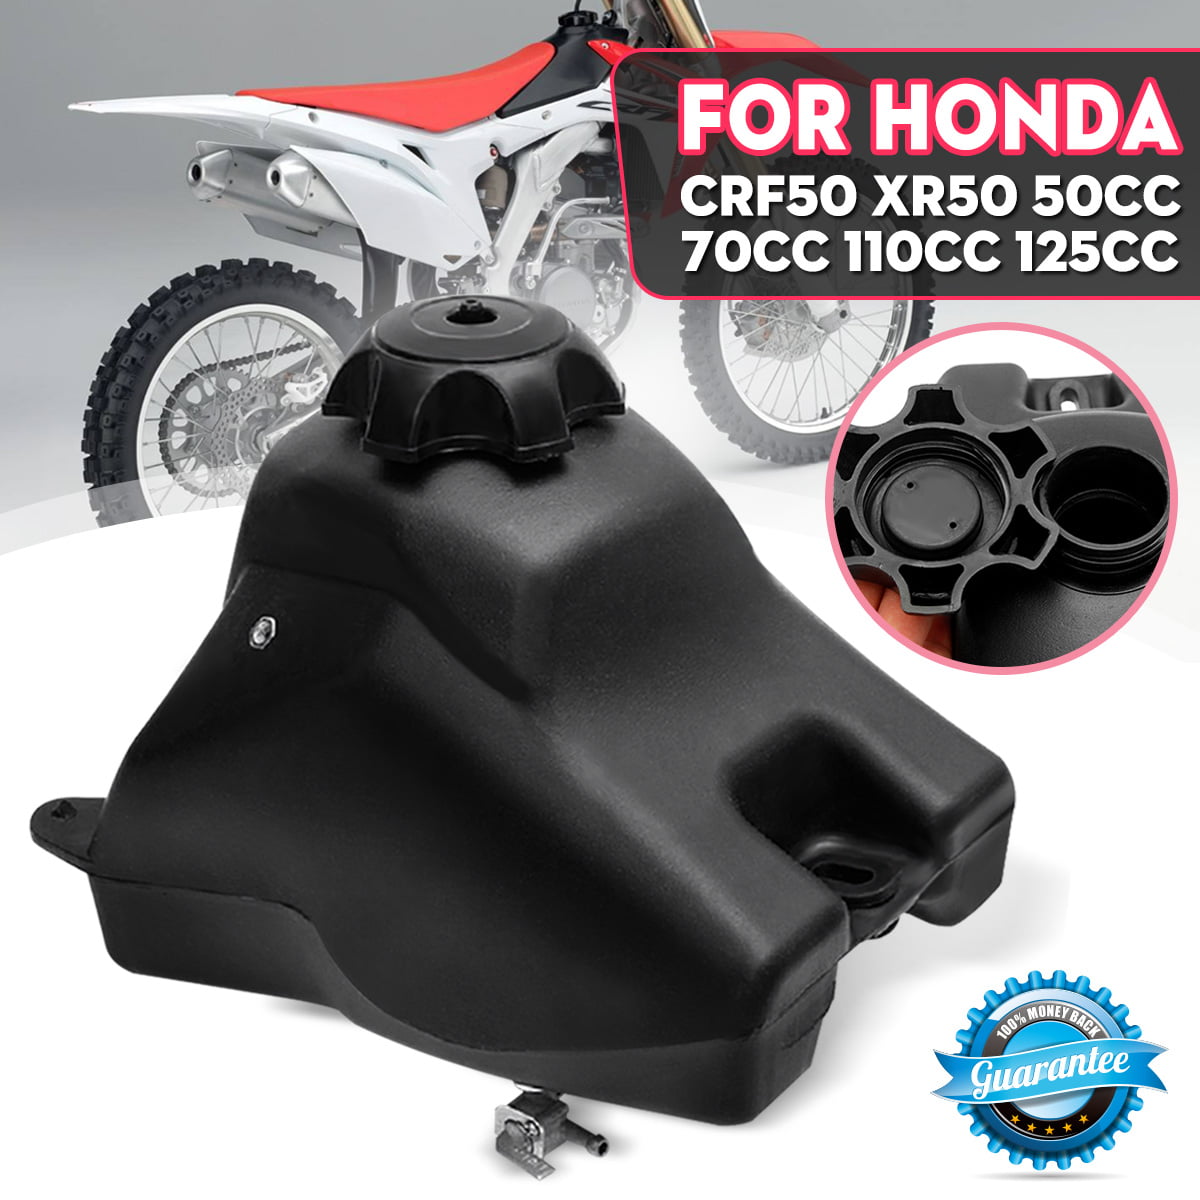 GAS Fuel Tank CAP for SSR 110 90 Honda CRF50 125cc Taotao KLX TTR Dirt Pit Bike